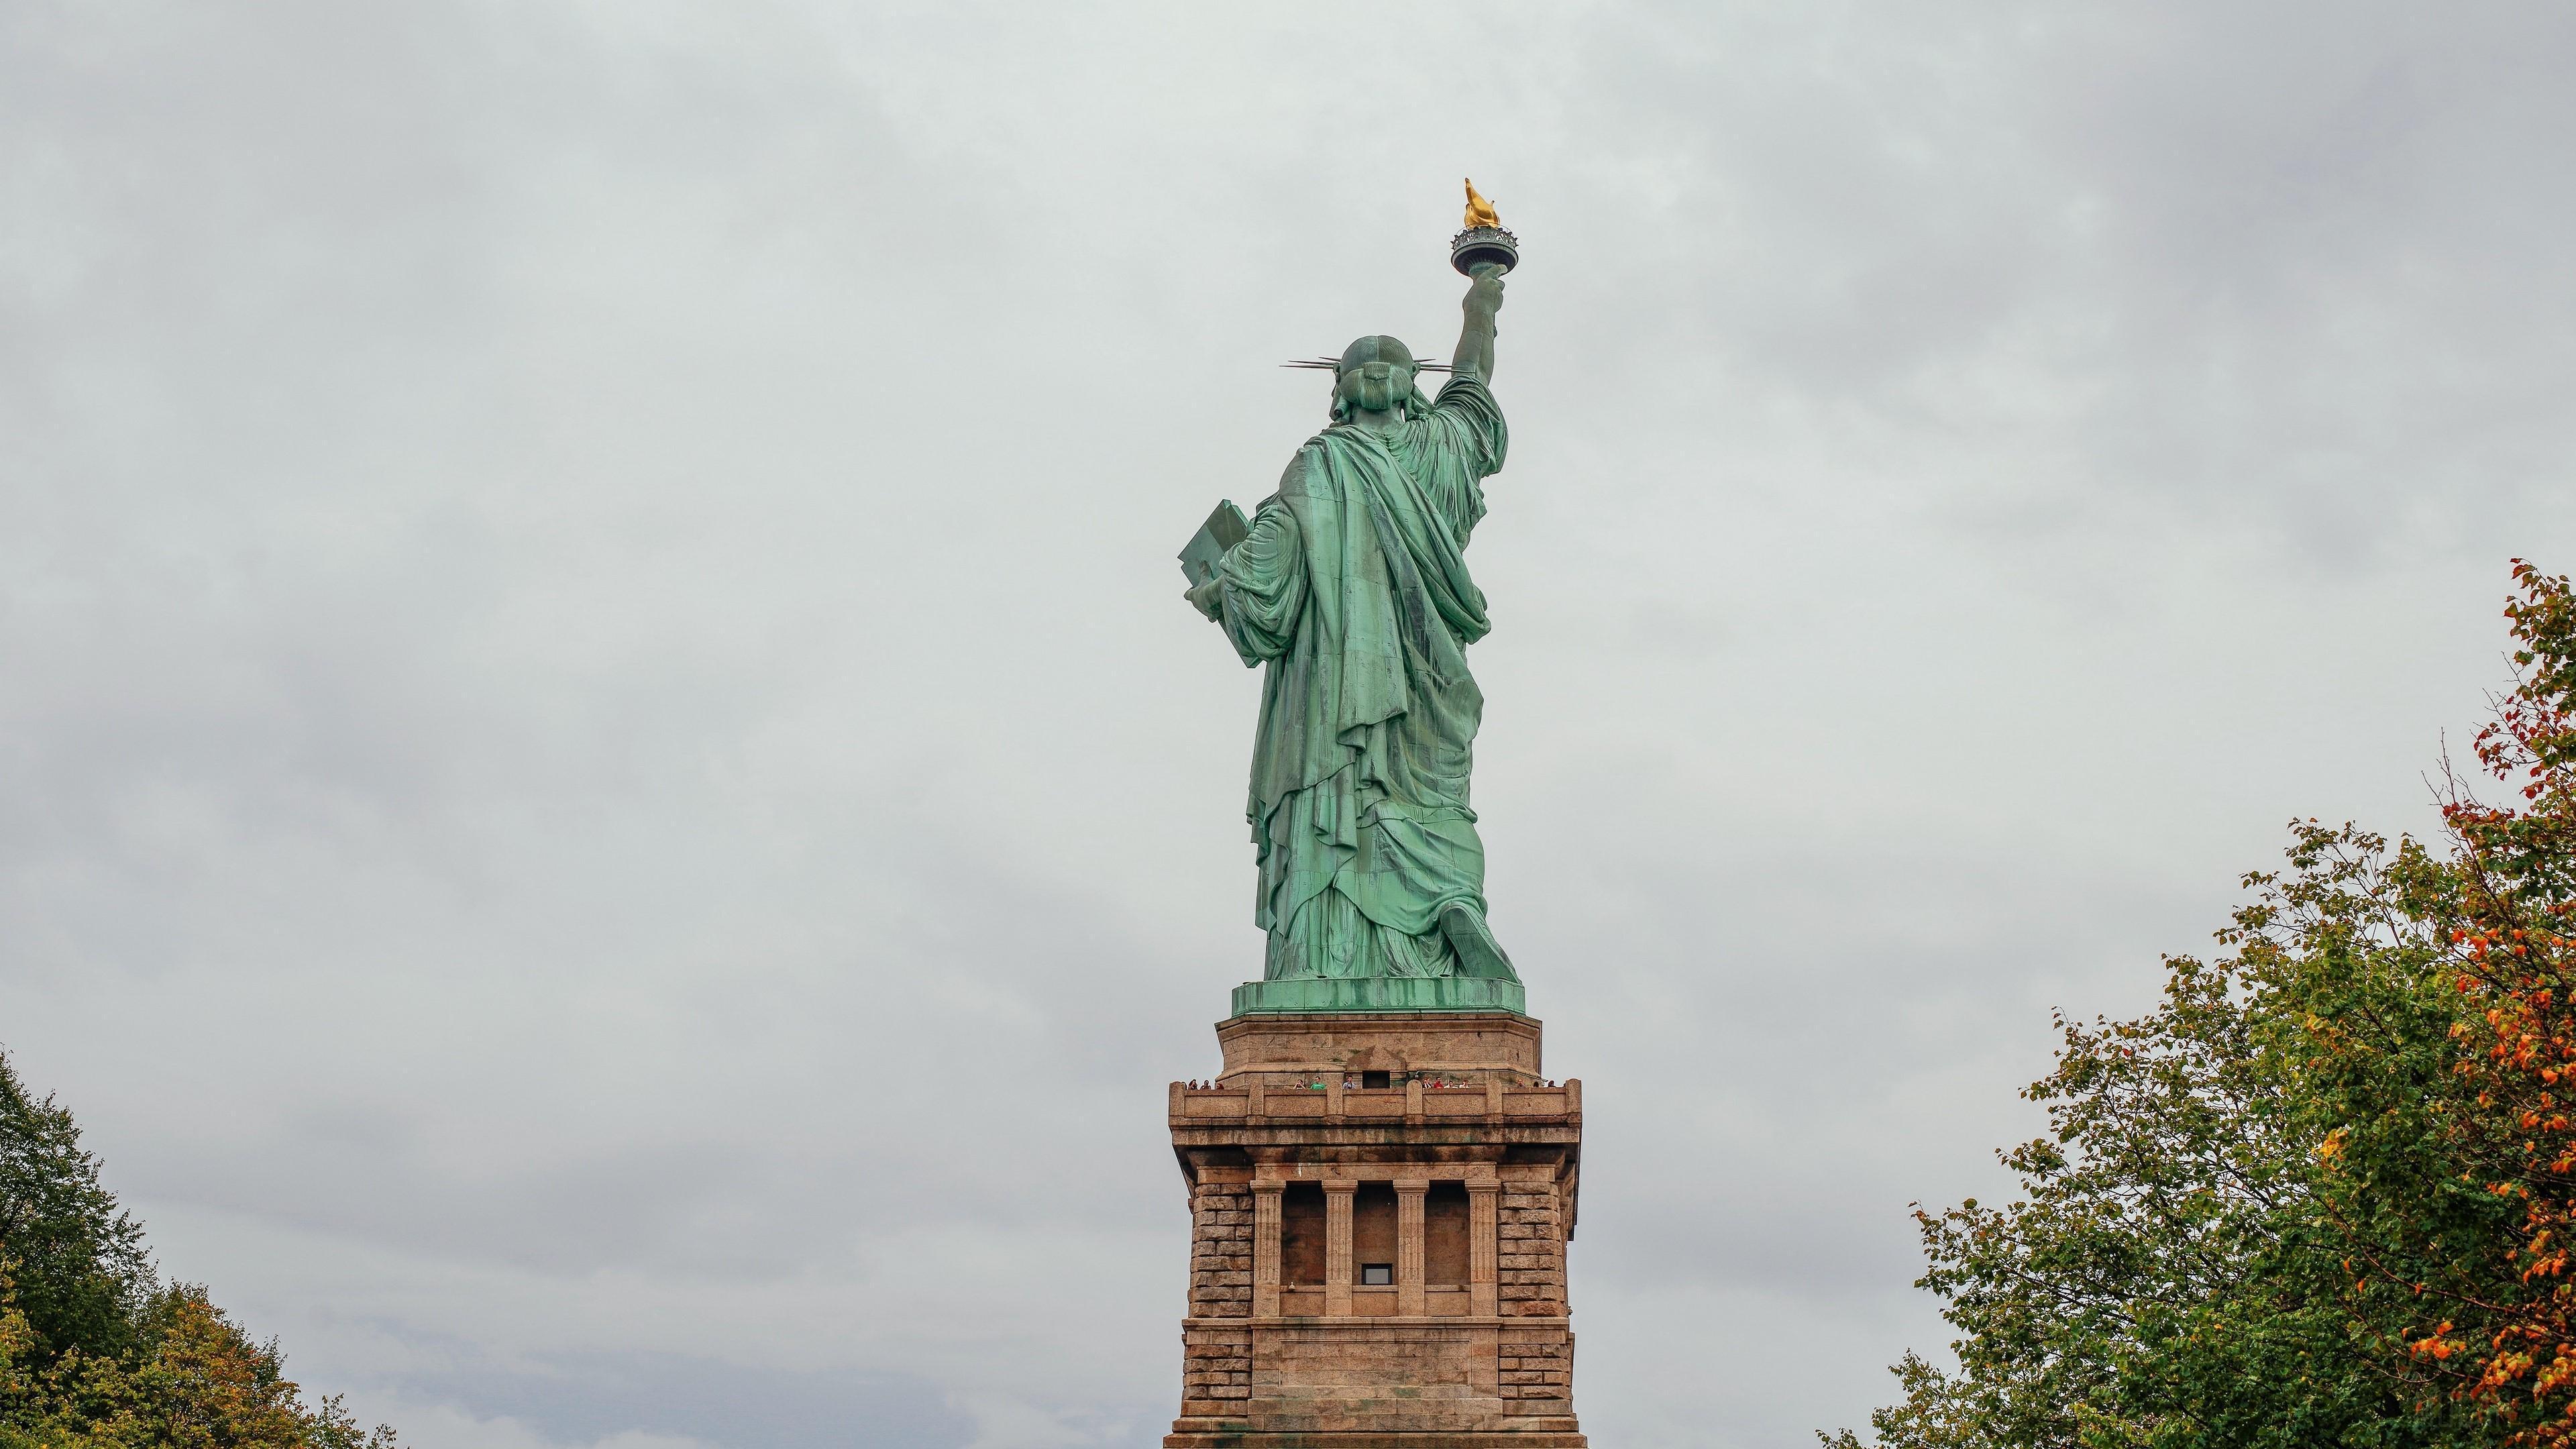 HD wallpaper, Statue Of Liberty, New York, Sculpture 4K